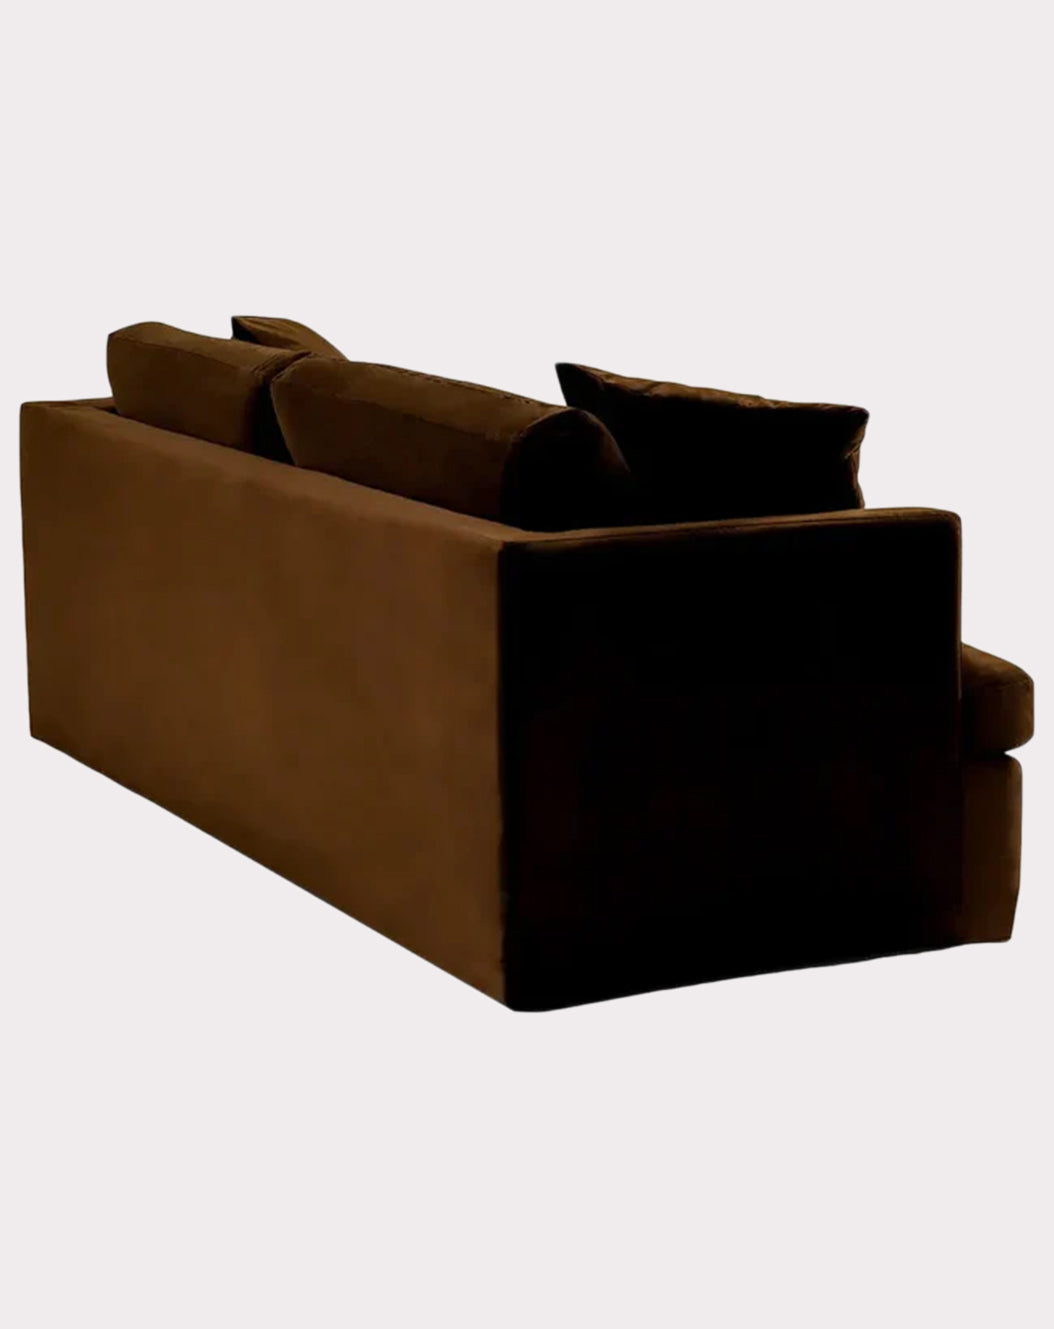 Burleigh 3 Seater Slip Brown Cover Sofa